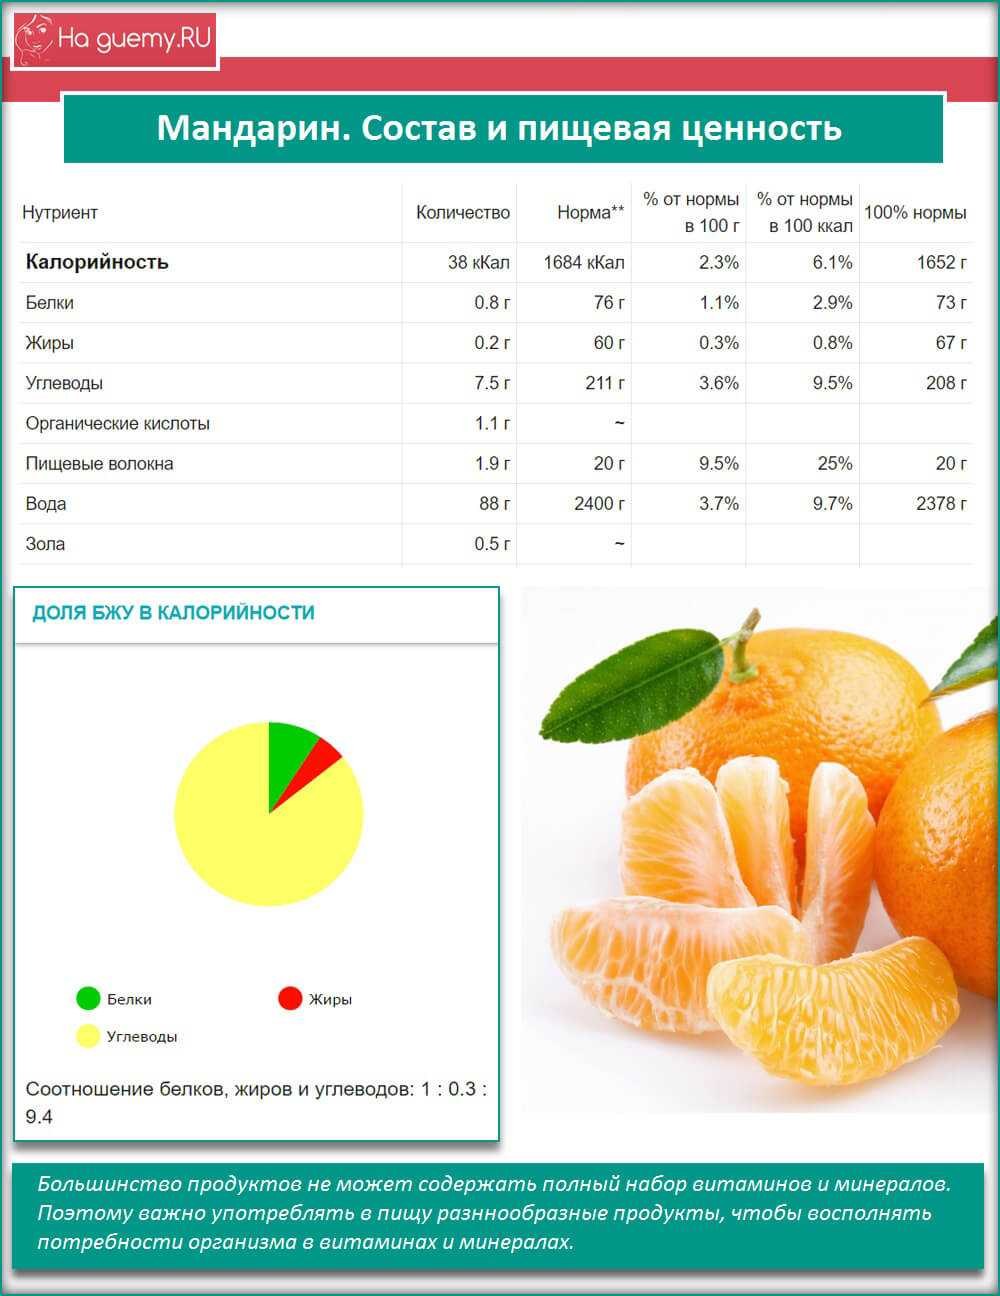 Мандарины белки. Мандарин состав на 100 грамм витамины. Пищевая ценность мандарина в 100 граммах. Мандарин калорийность на 100 грамм. Энергетическая ценность апельсина в 100 граммах.